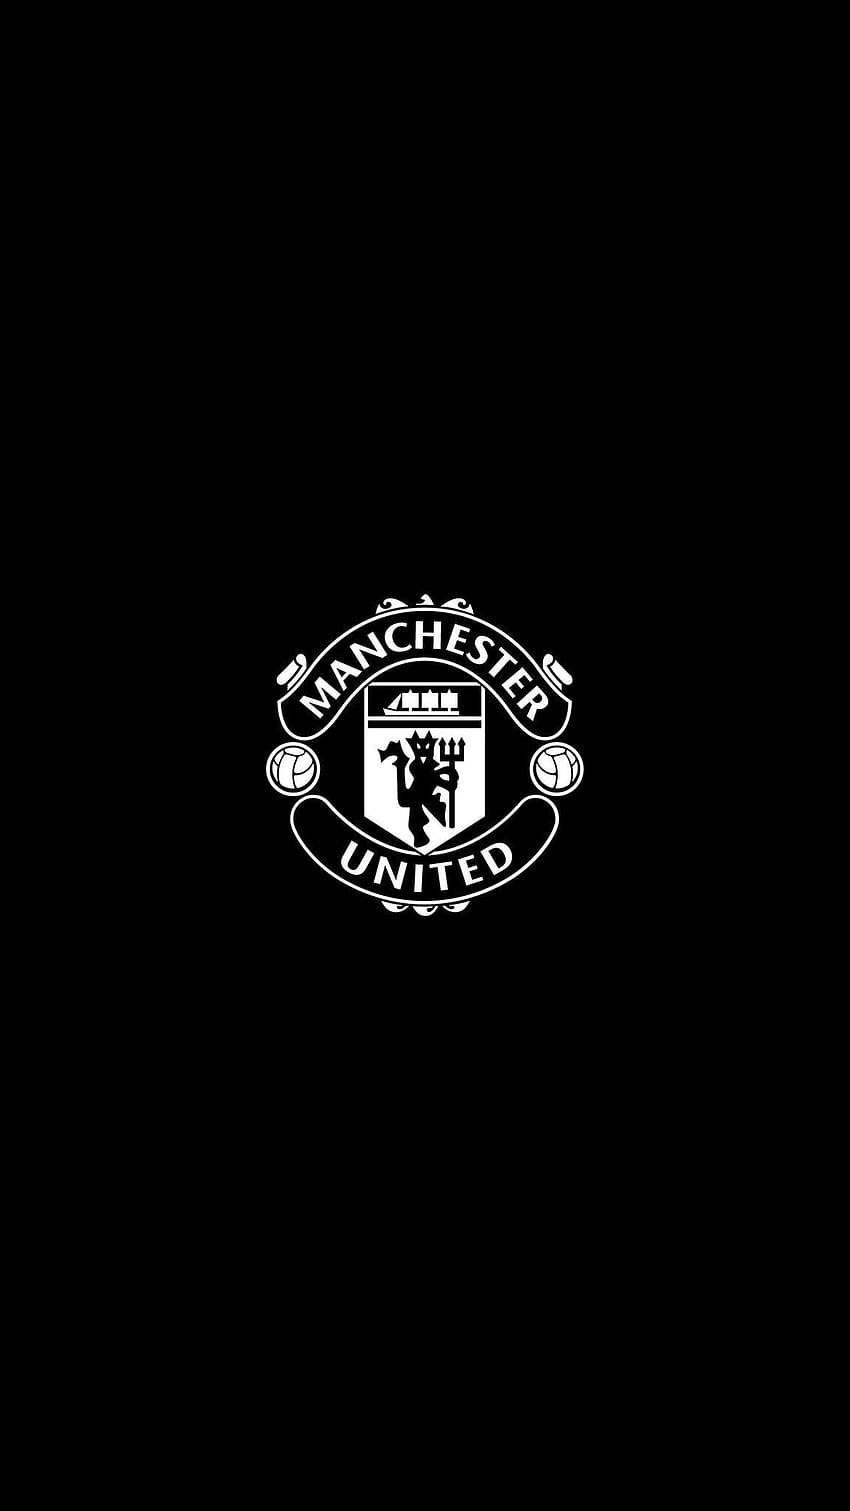 Ide Setan Merah. man united, klub sepak bola manchester united, manchester united football, Manchester United Black wallpaper ponsel HD